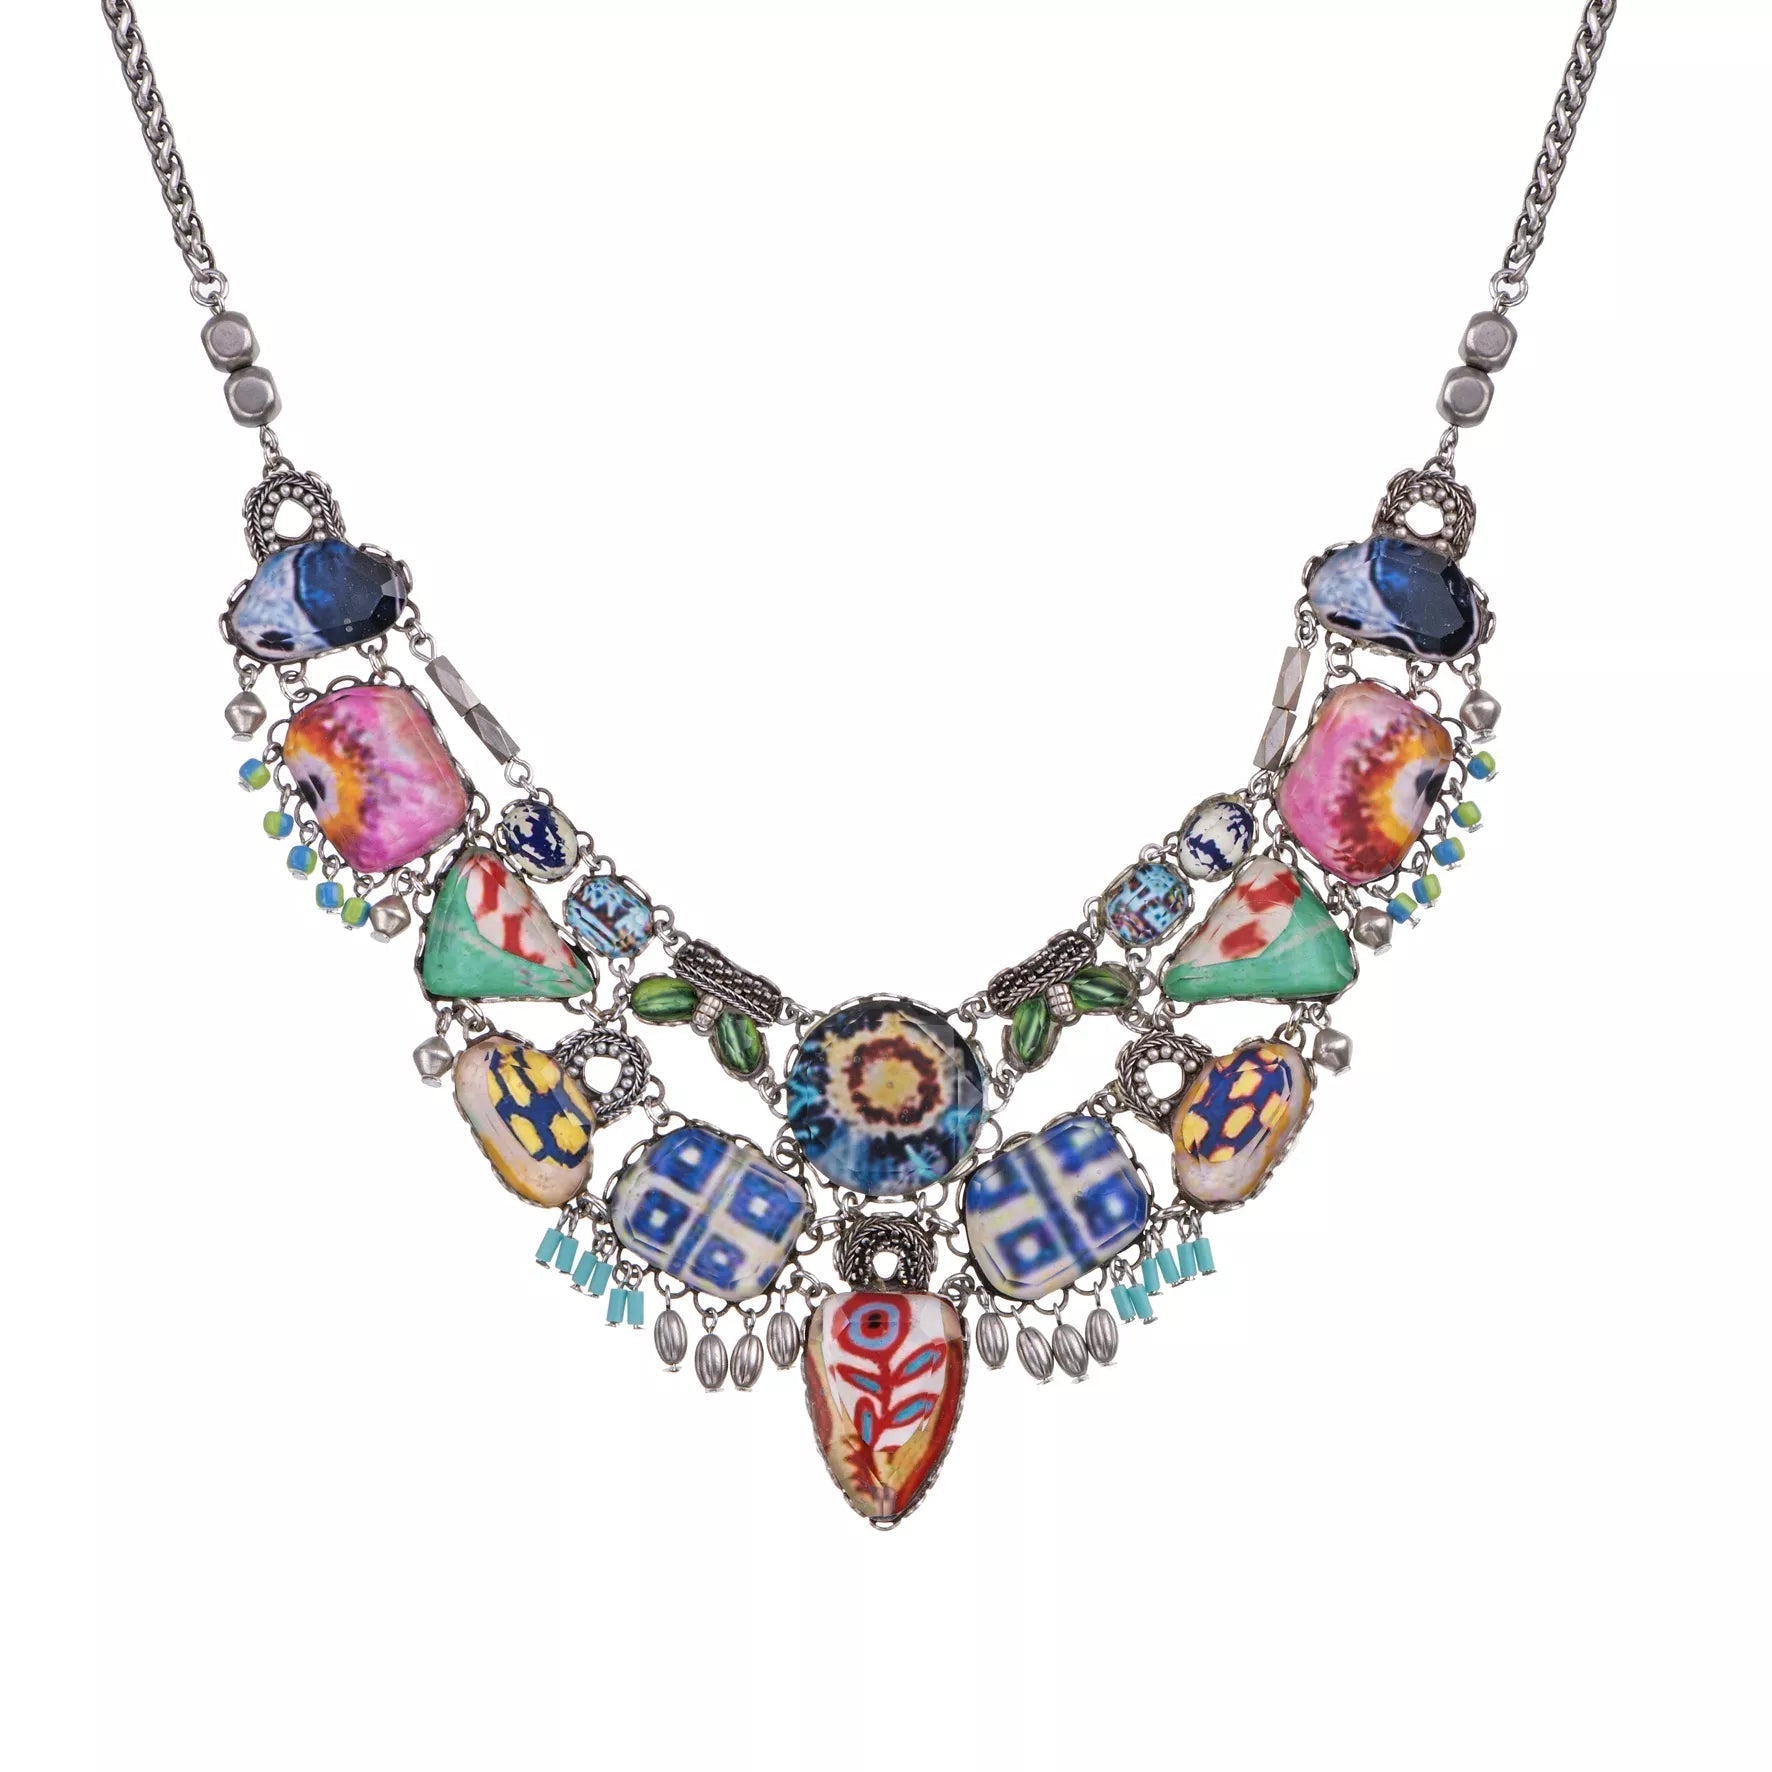 Carnival Celestina Necklace - The Nancy Smillie Shop - Art, Jewellery & Designer Gifts Glasgow